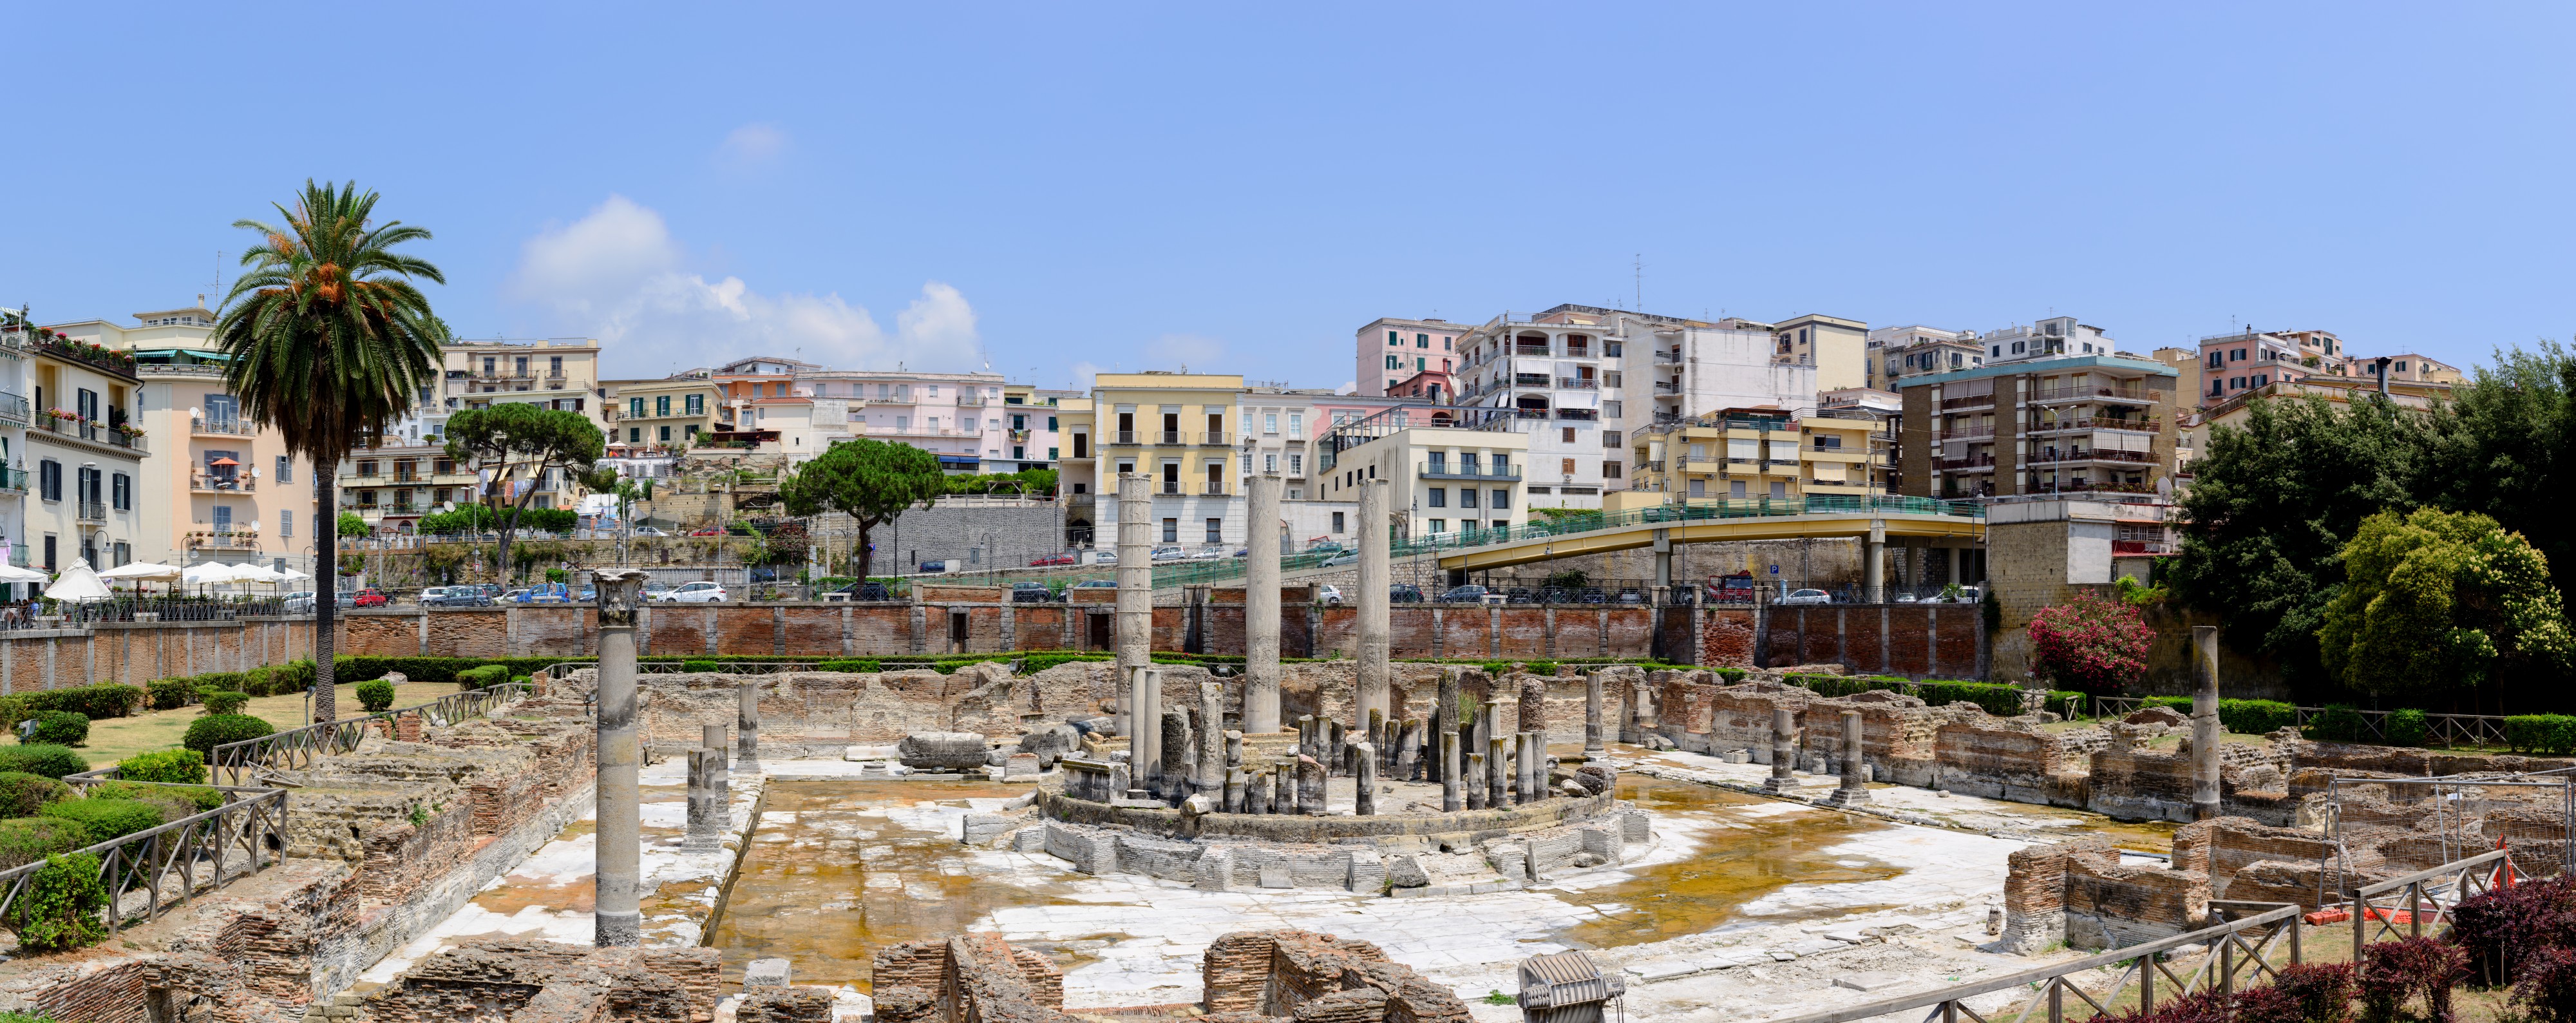 Ancient Roman market place and Serapis temple panorama - Pozzuoli - Campania - Italy - July 11th 2013